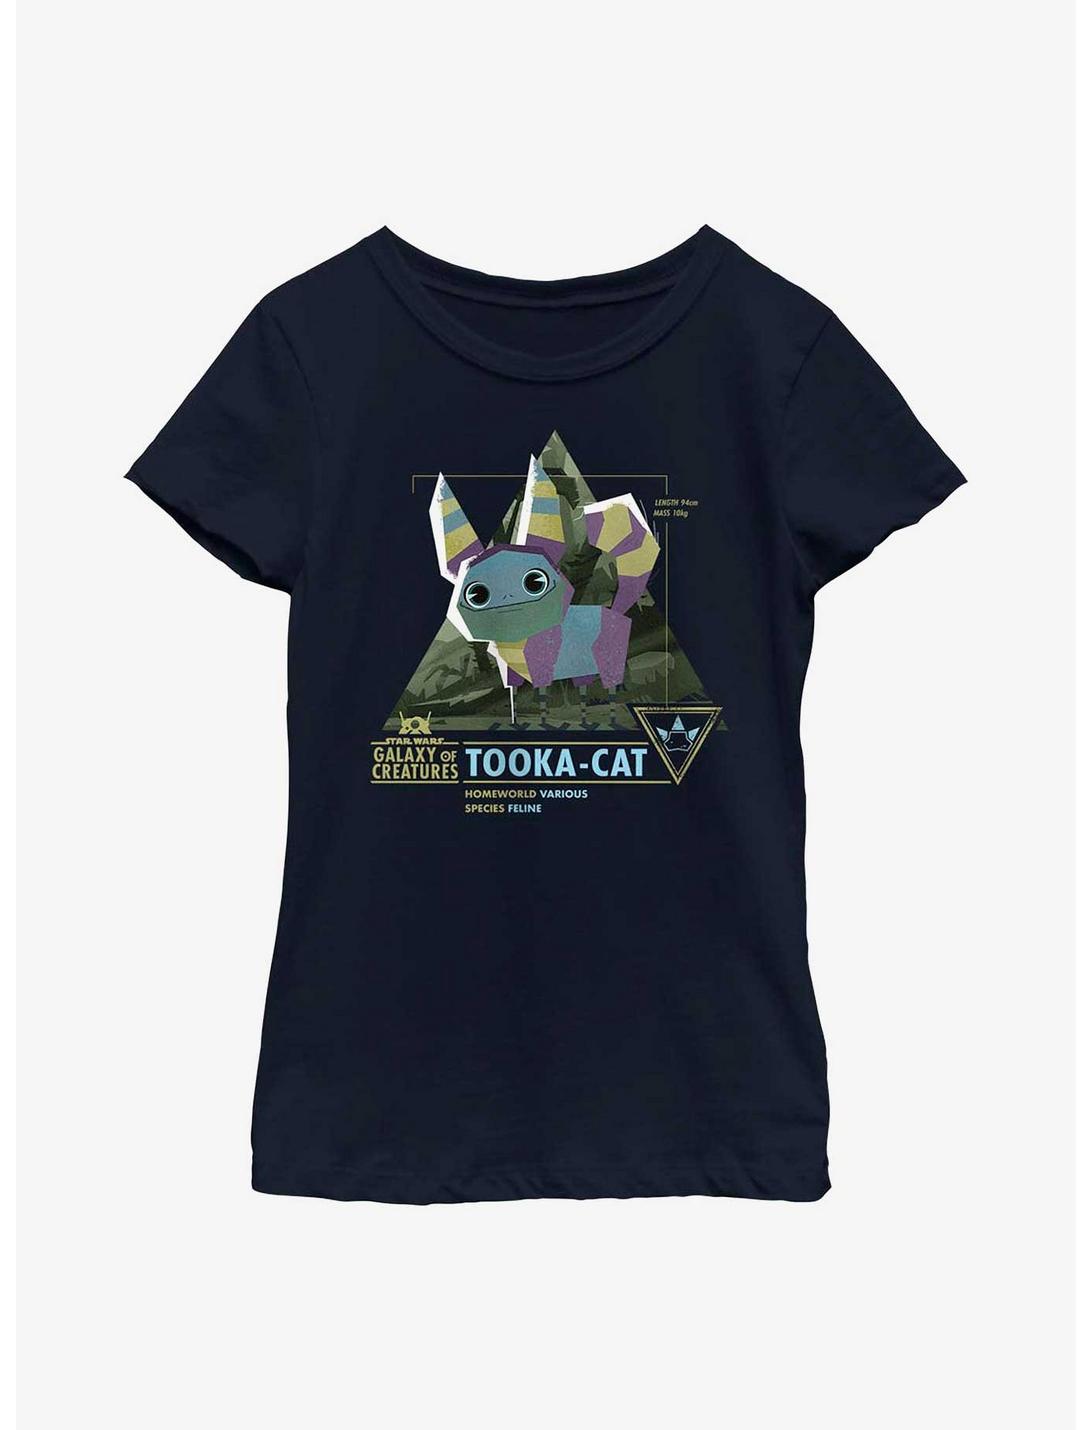 Star Wars Galaxy Of Creatures Tooka-Cat Species Youth Girls T-Shirt, NAVY, hi-res